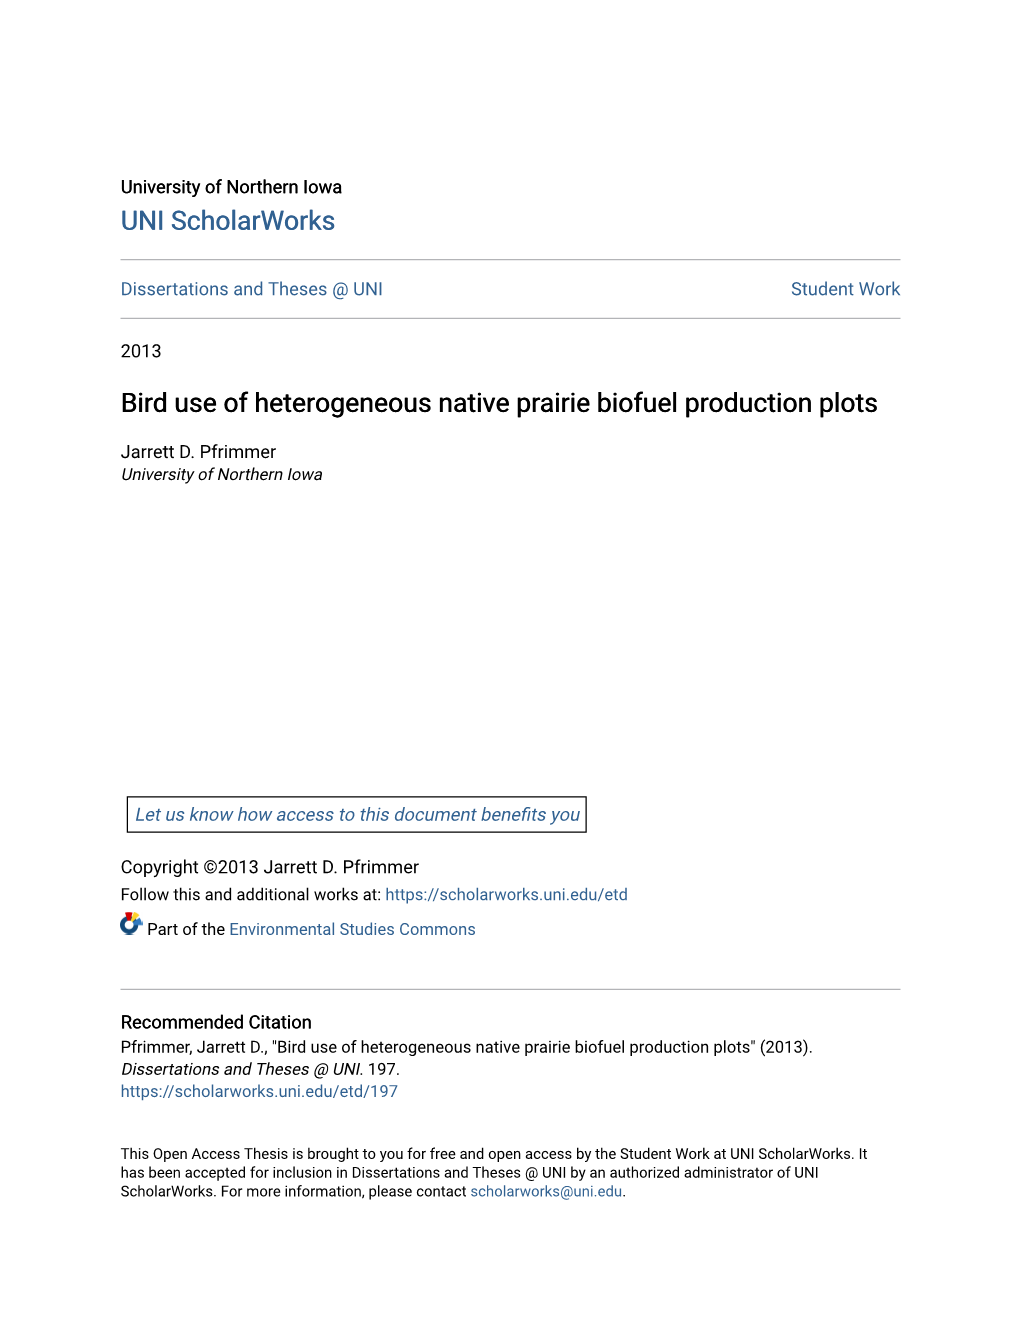 Bird Use of Heterogeneous Native Prairie Biofuel Production Plots